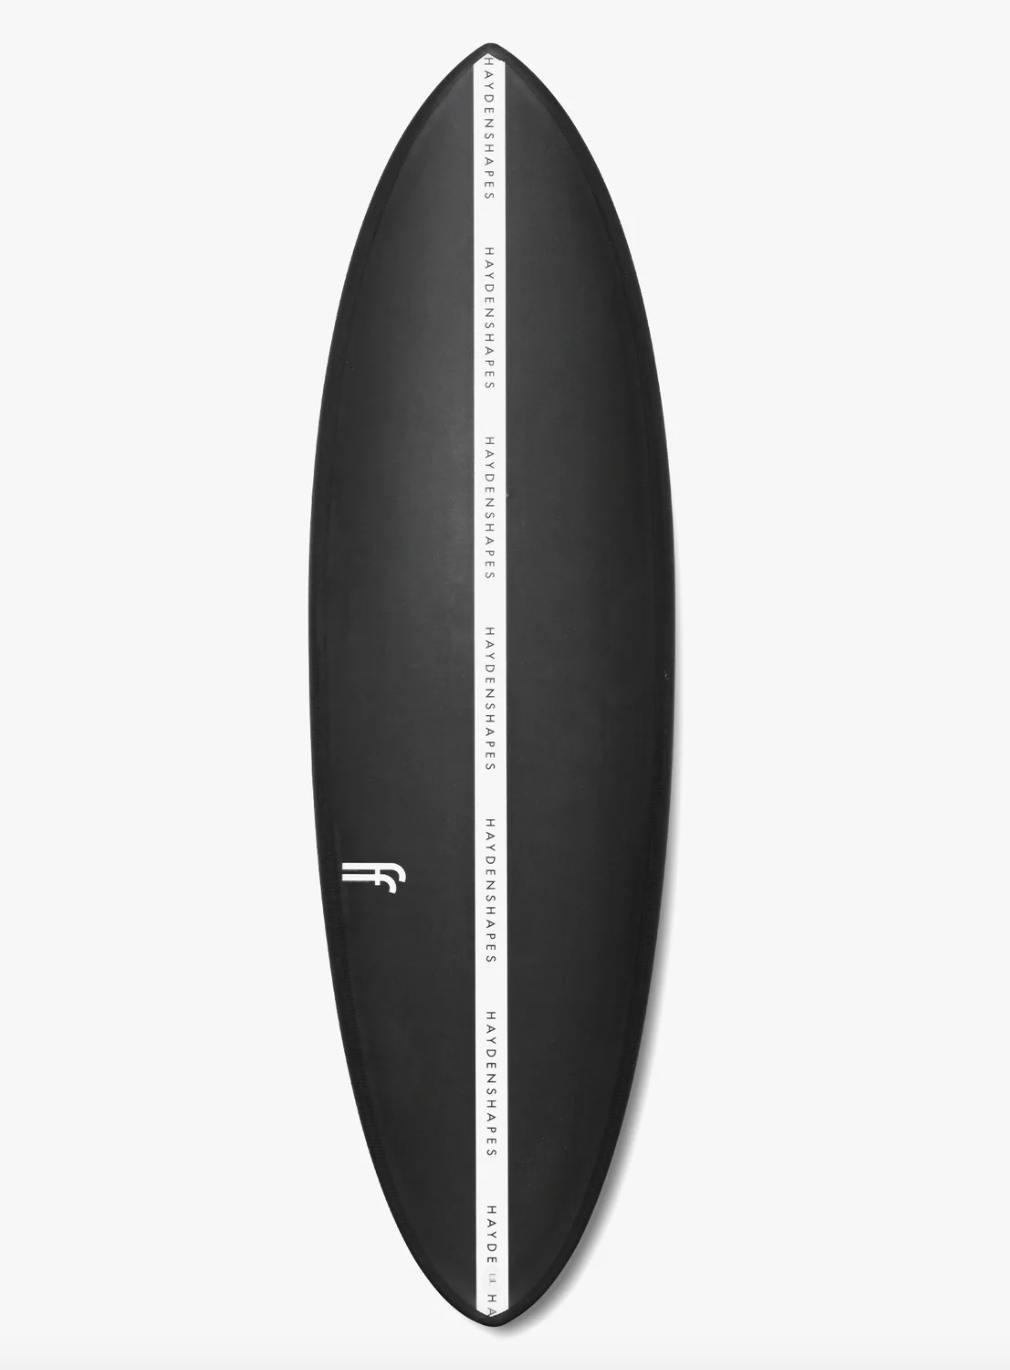 Hypto Kypto Futureflex - Haydenshapes Surfboard - 6'4" (In store pick-up only)